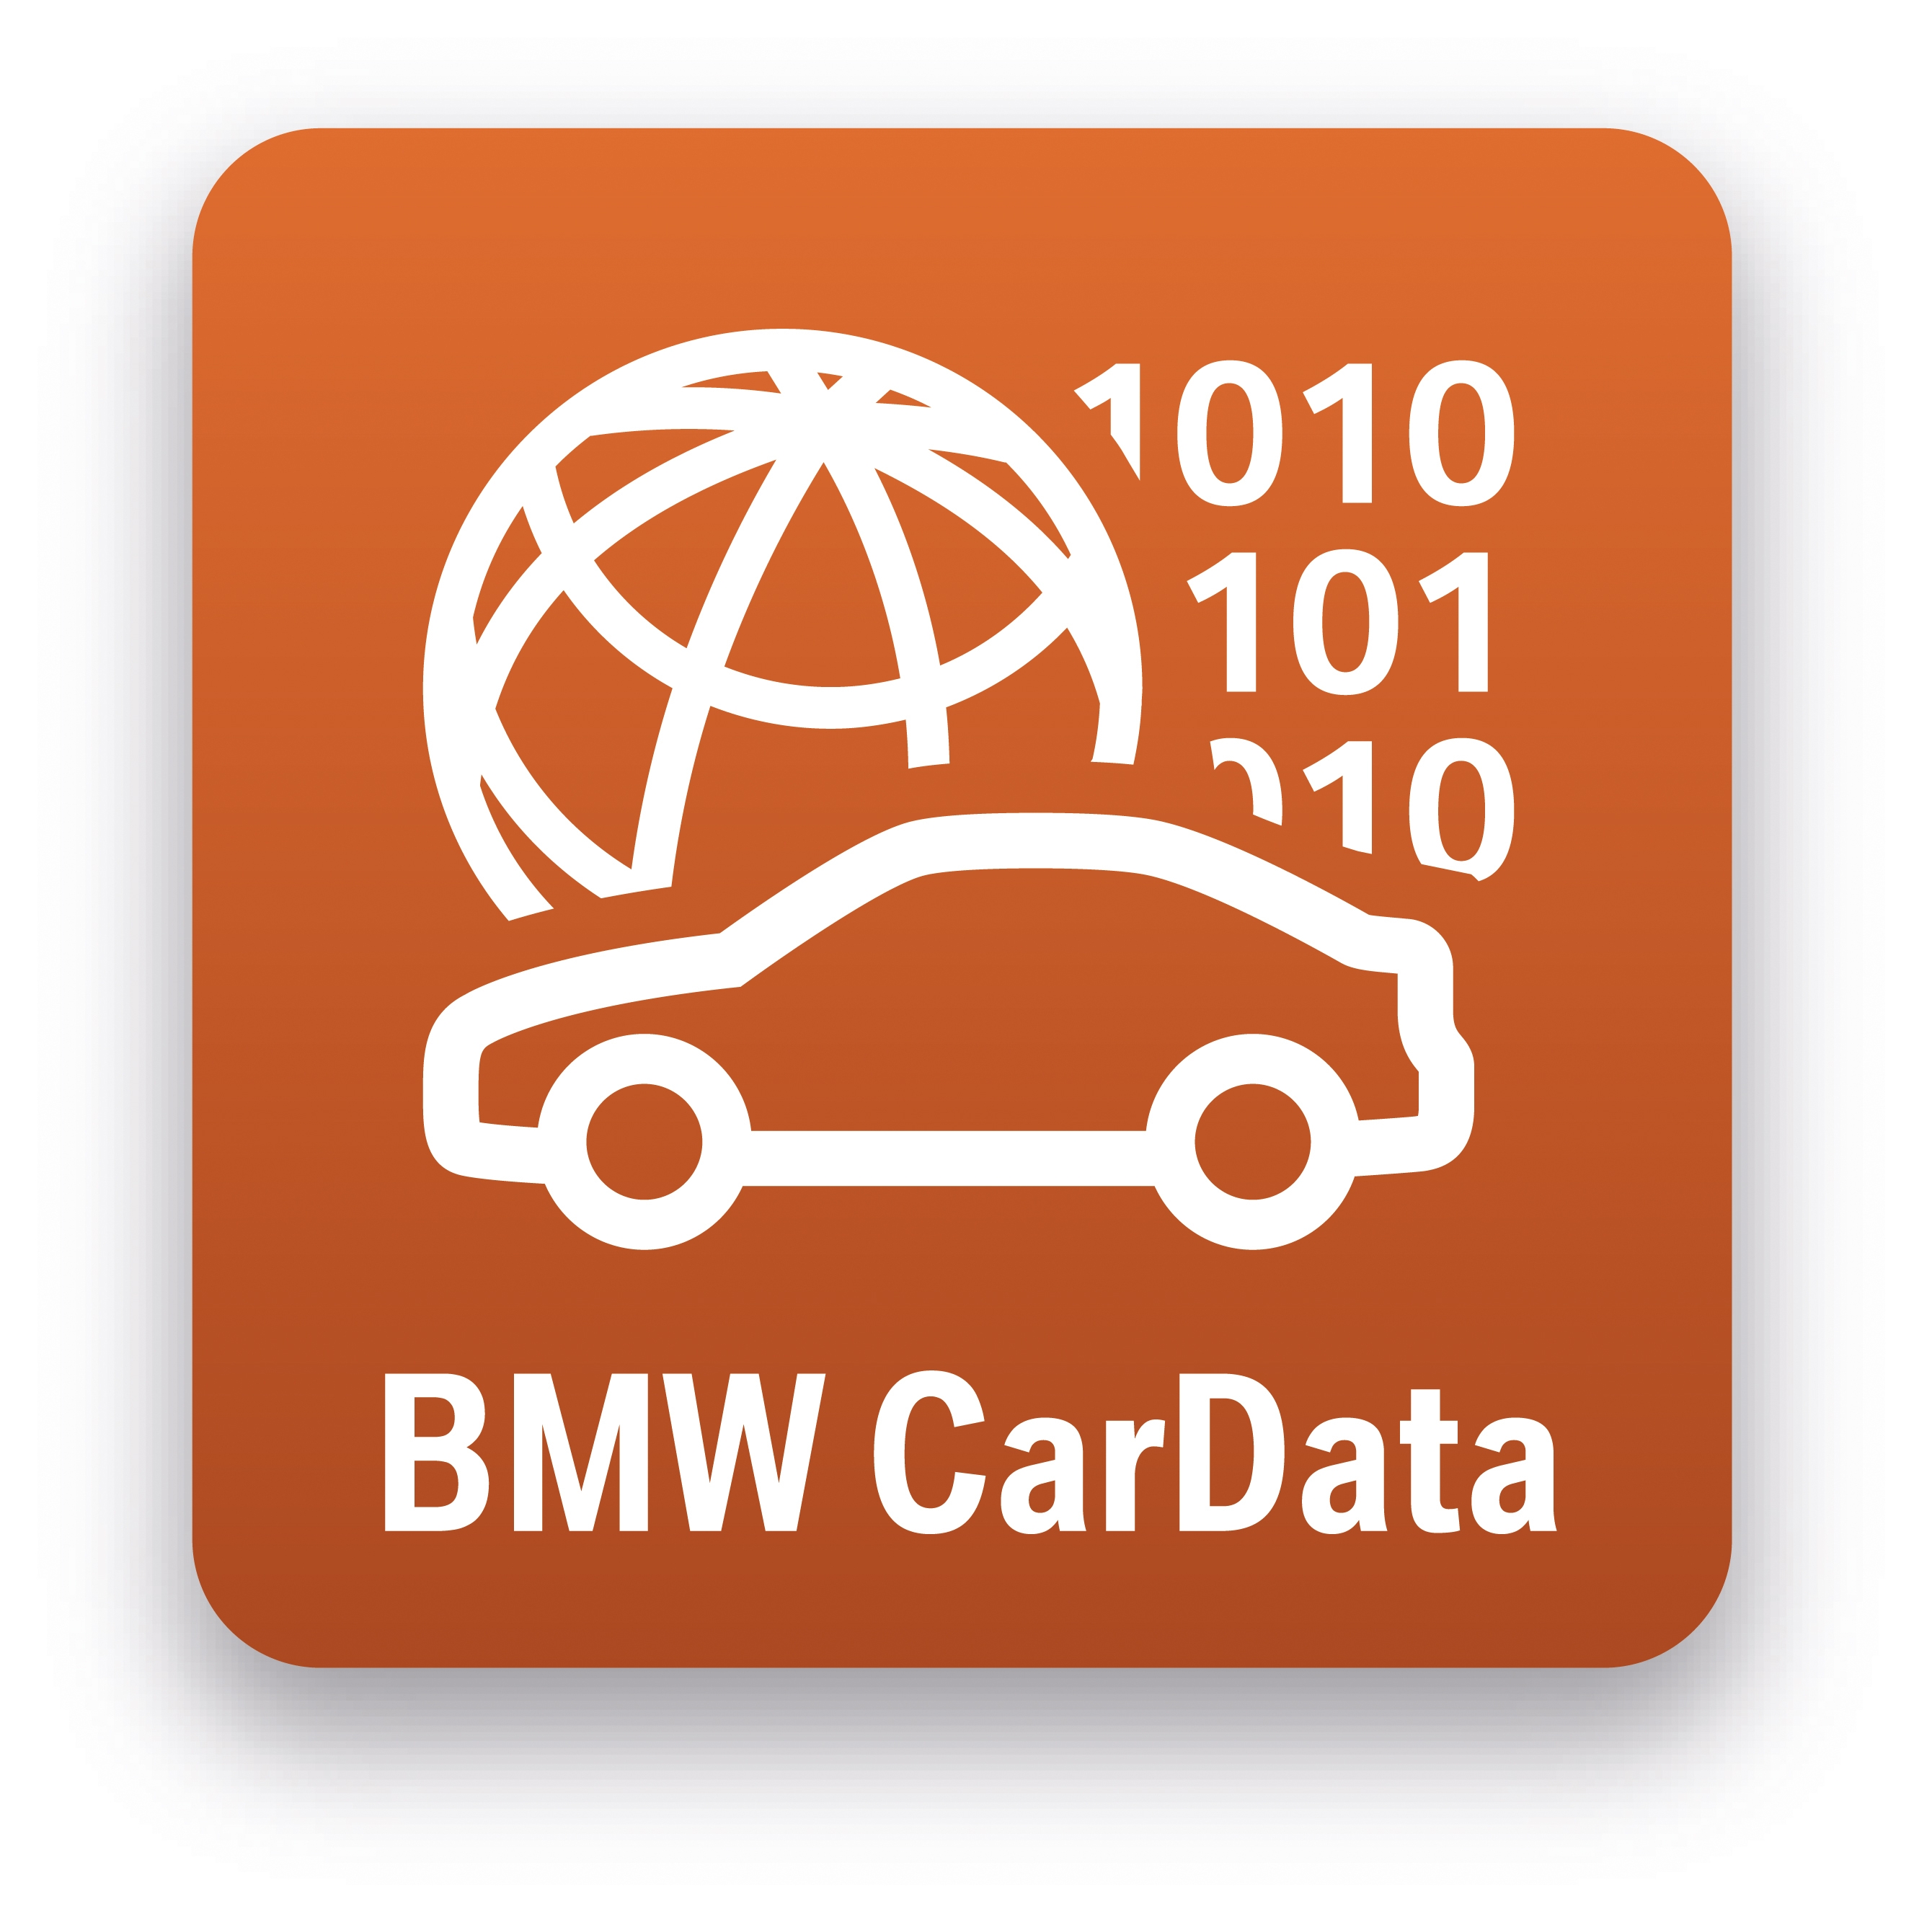 BMW CarData: Υπηρεσίες με οικονομική φιλοσοφία